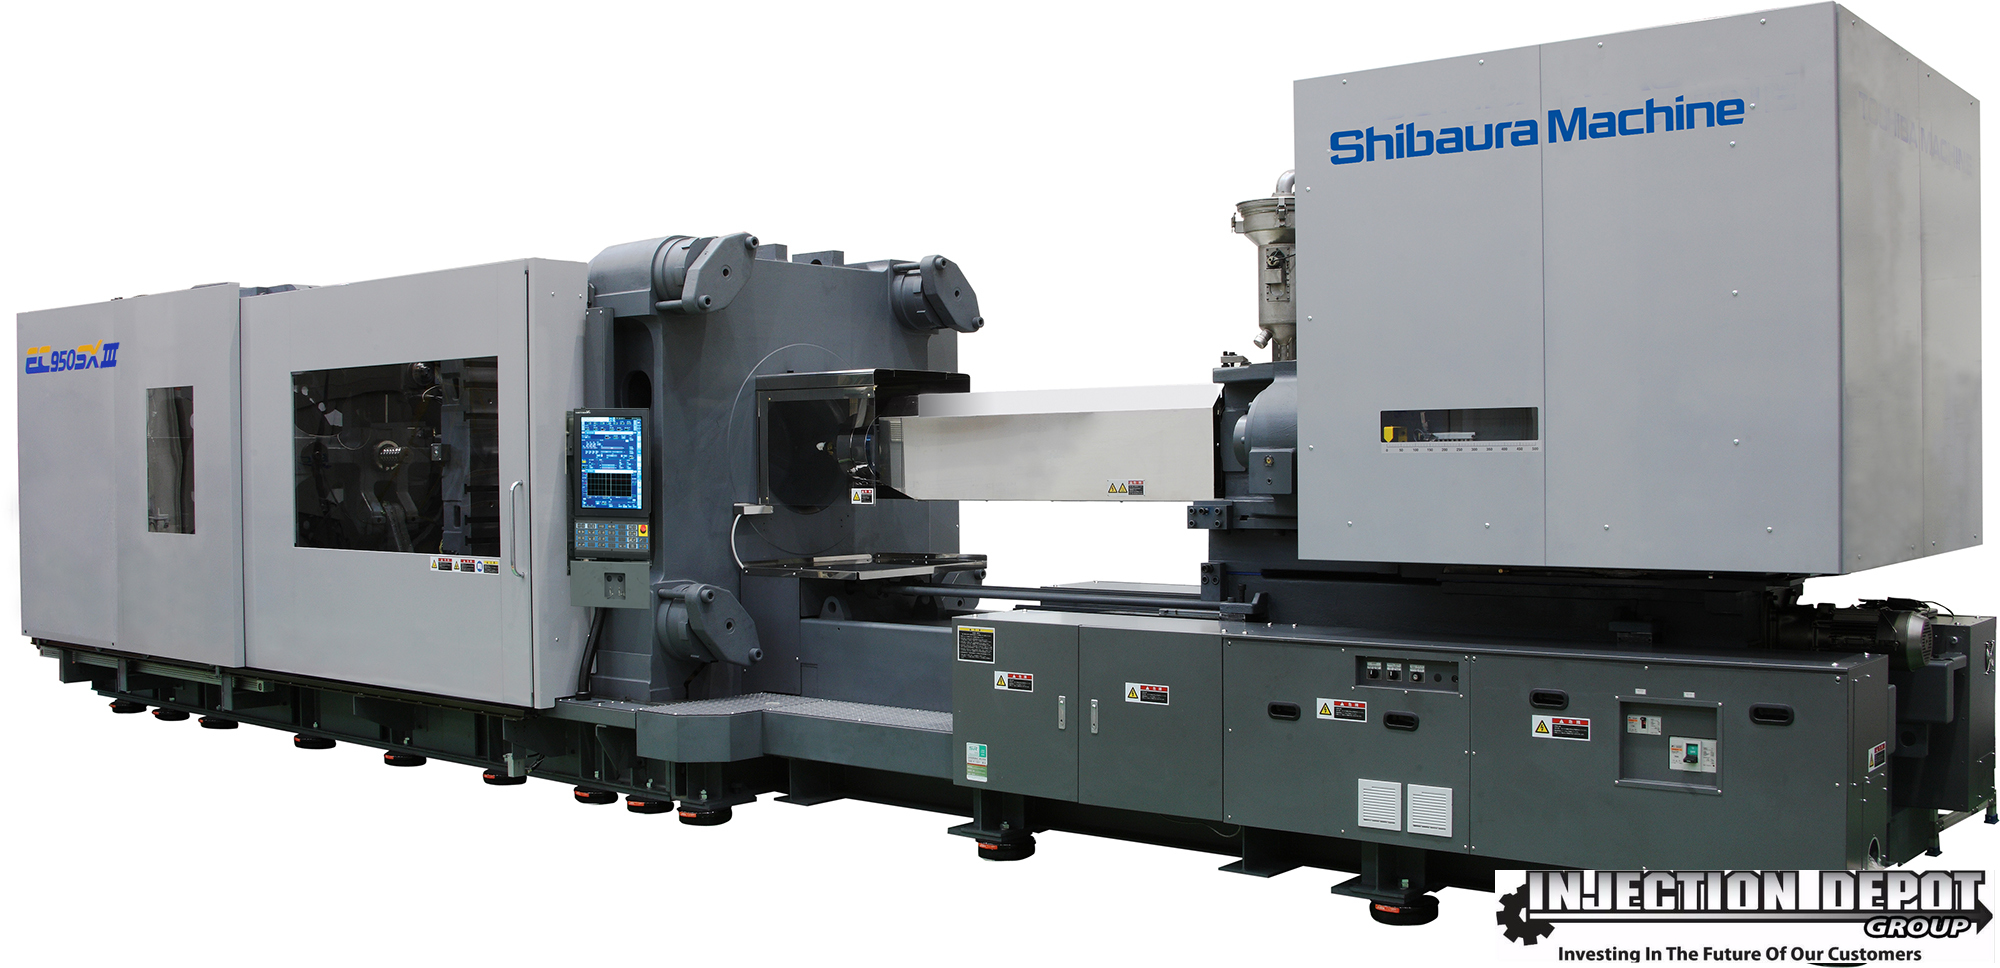 SHIBAURA MACHINE EC950SXIIIV70-i78 AT Horizontal Injection Moulding Machines | INJECTION DEPOT GROUP